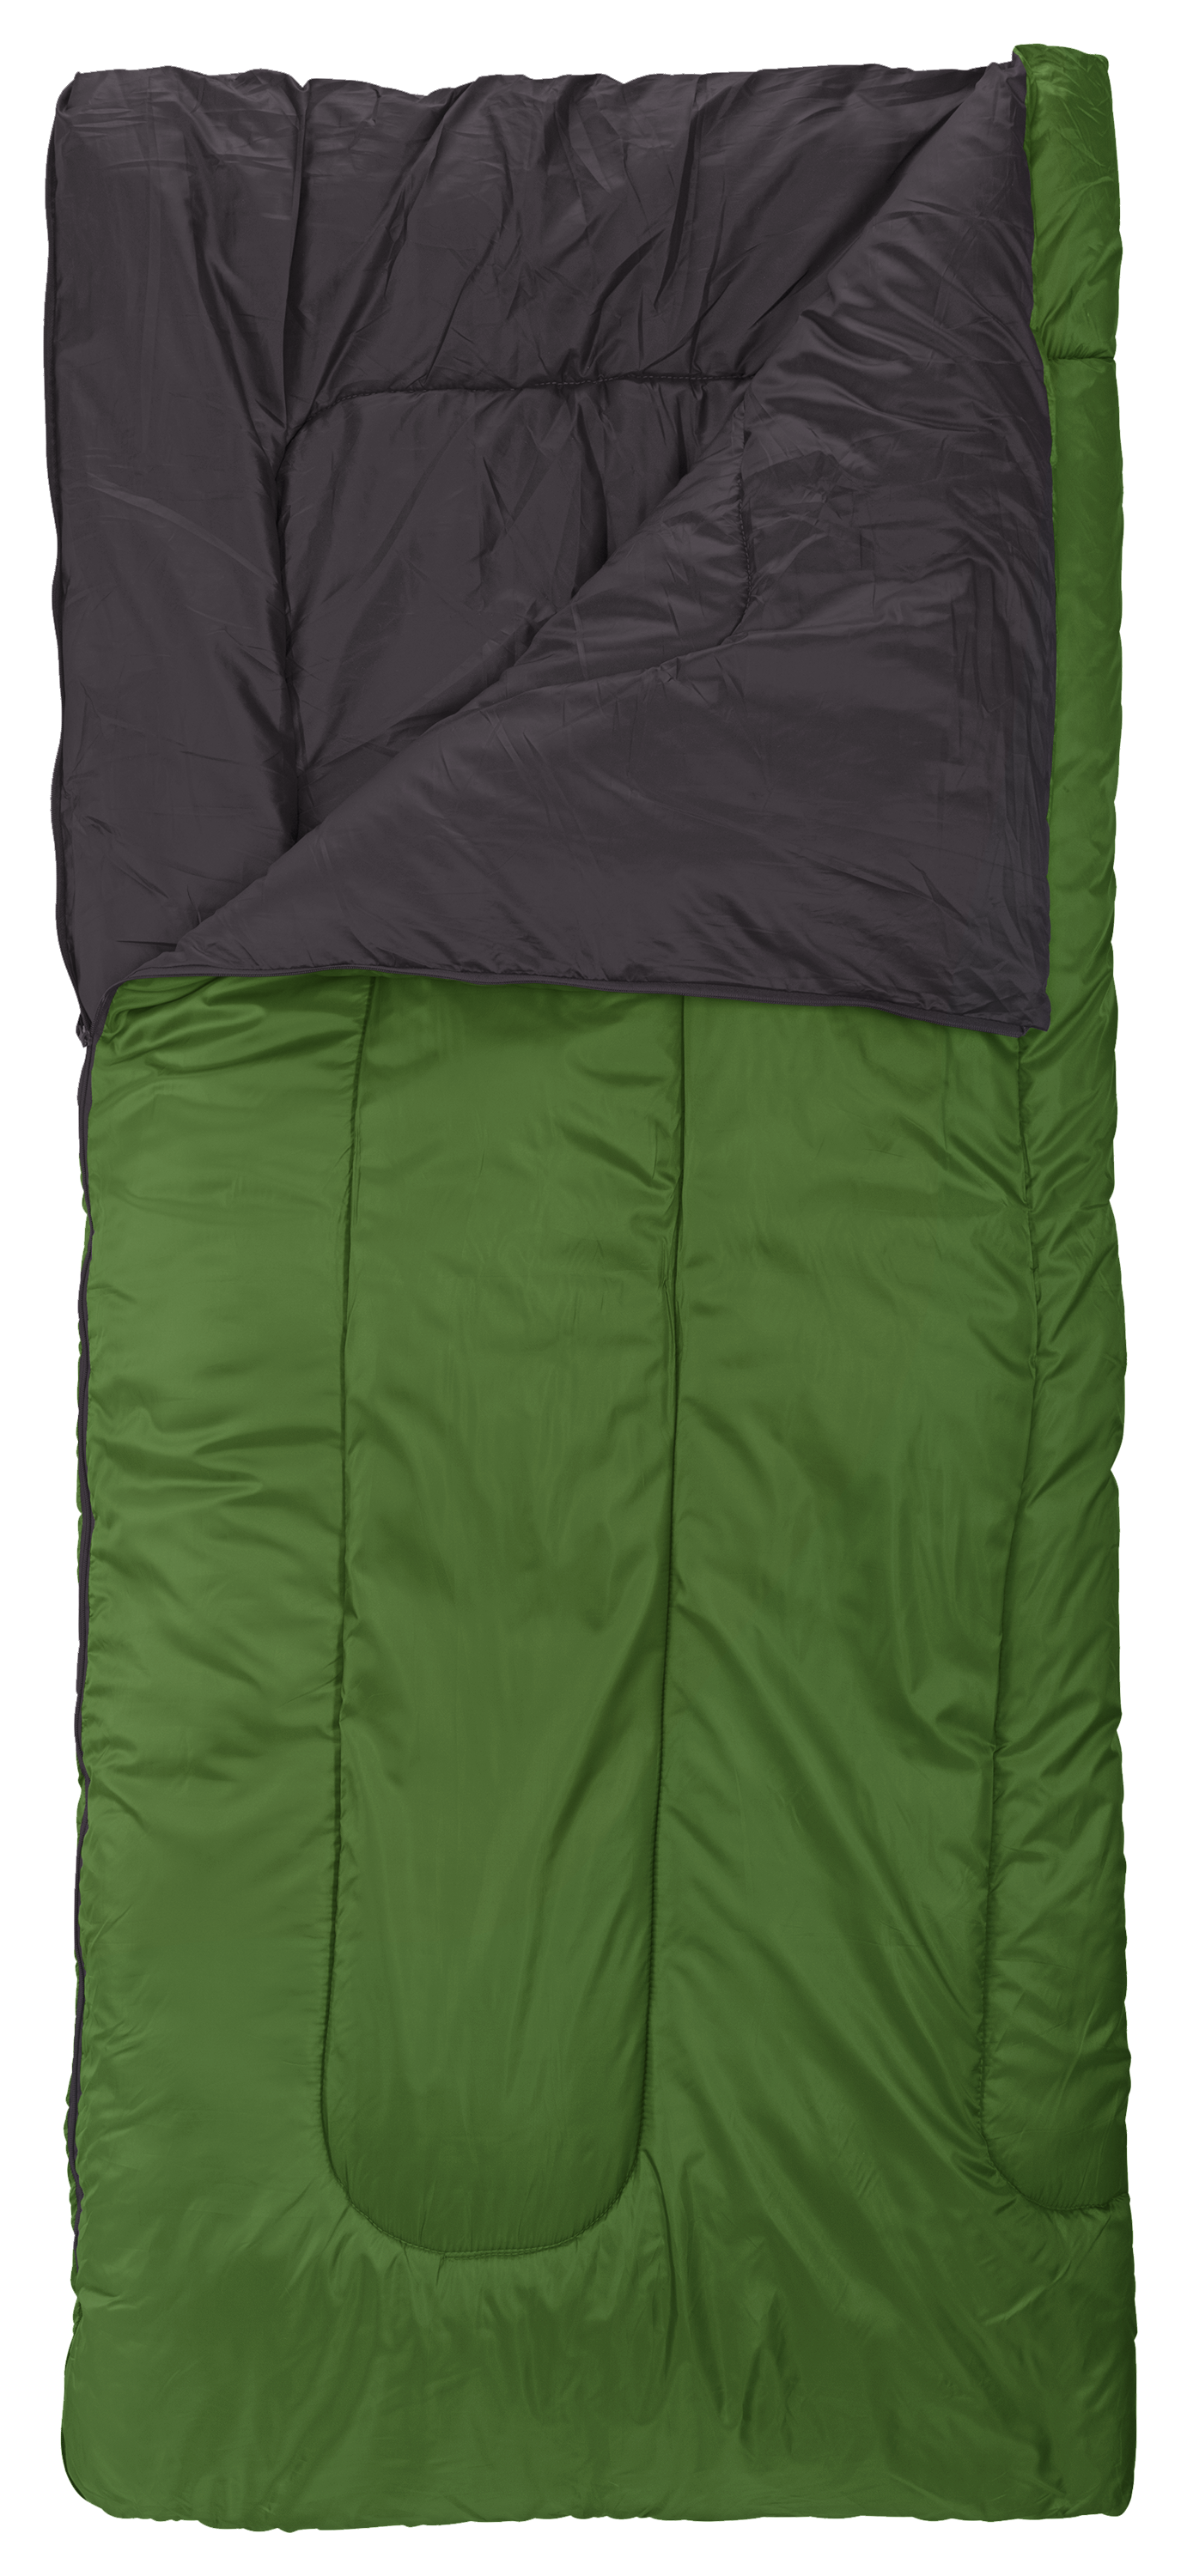 Bass Pro Shops Hawksbill 40  F Rectangular Sleeping Bag - Cactus Green